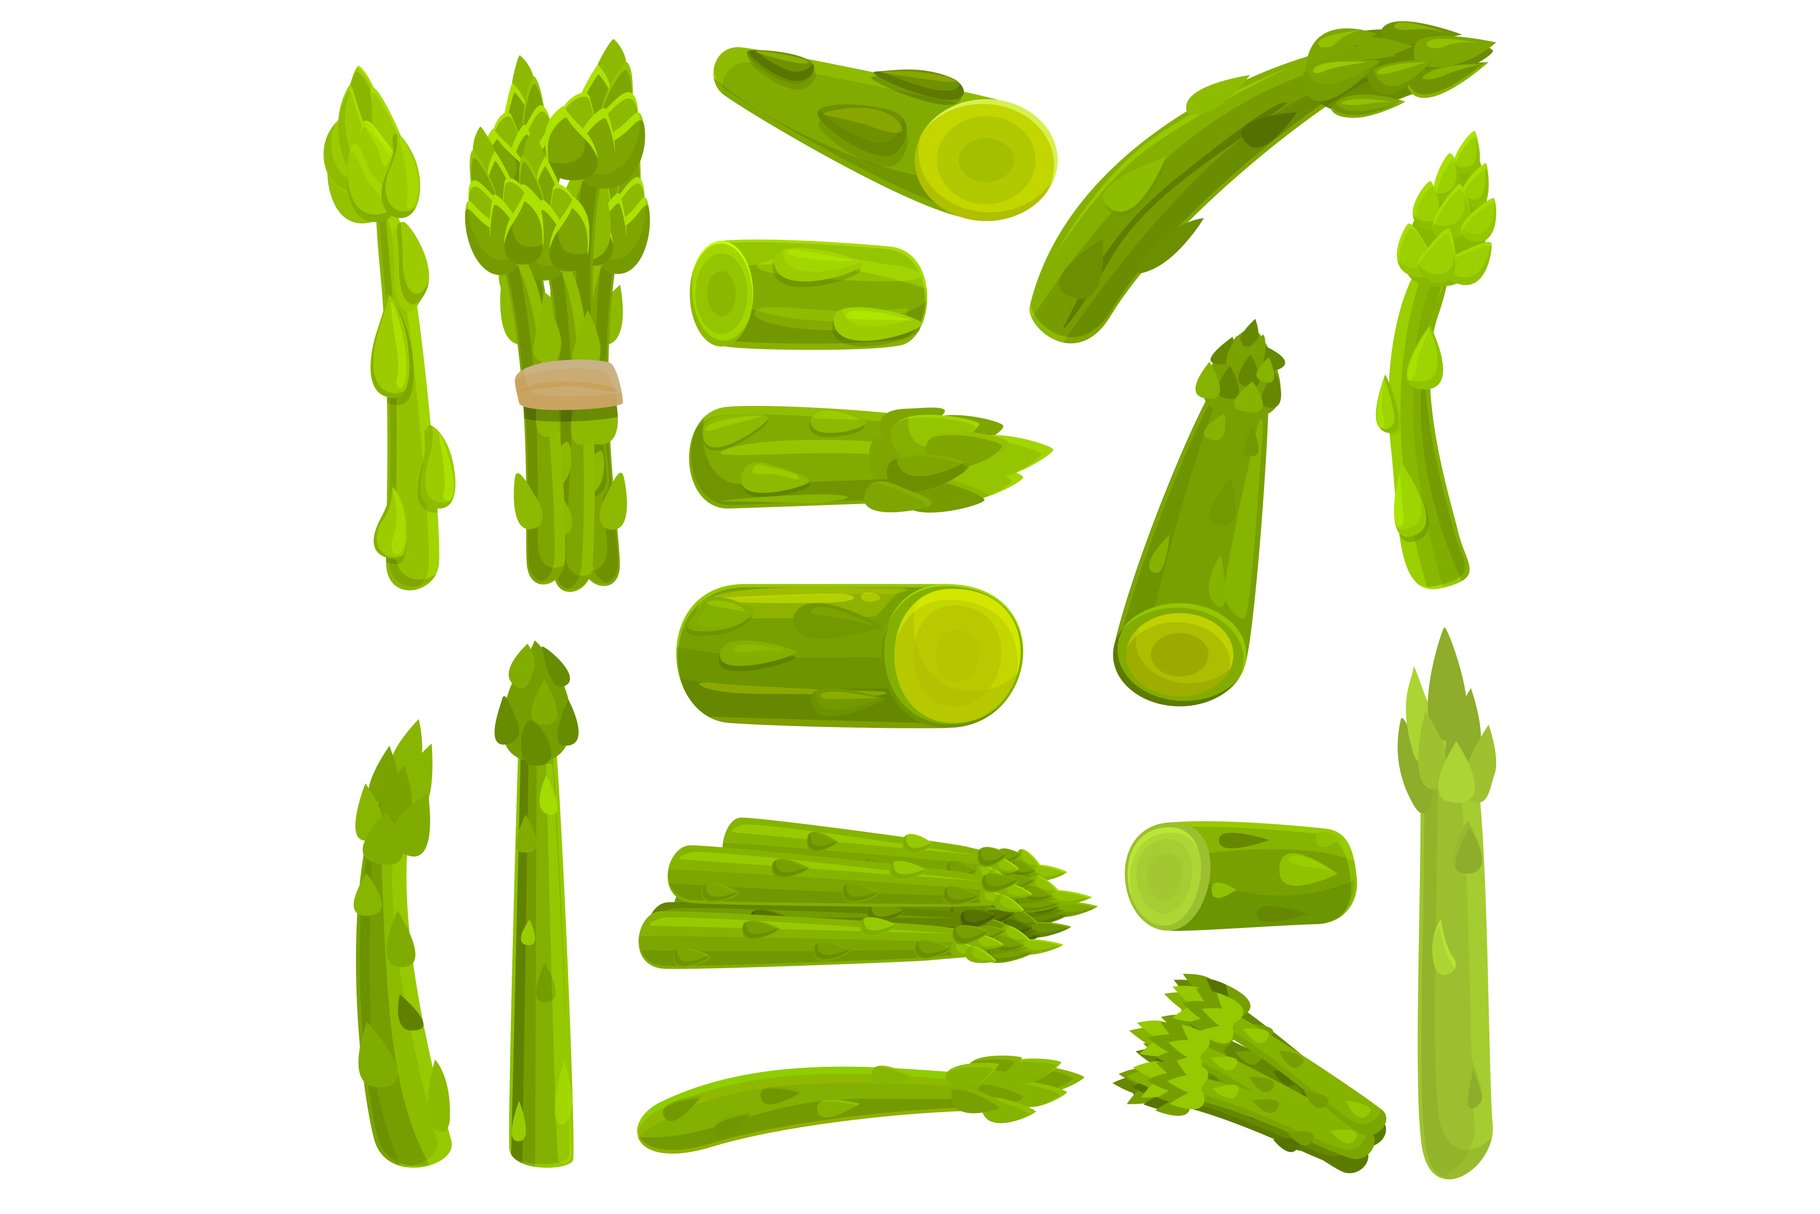 Diverse of green asparagus.